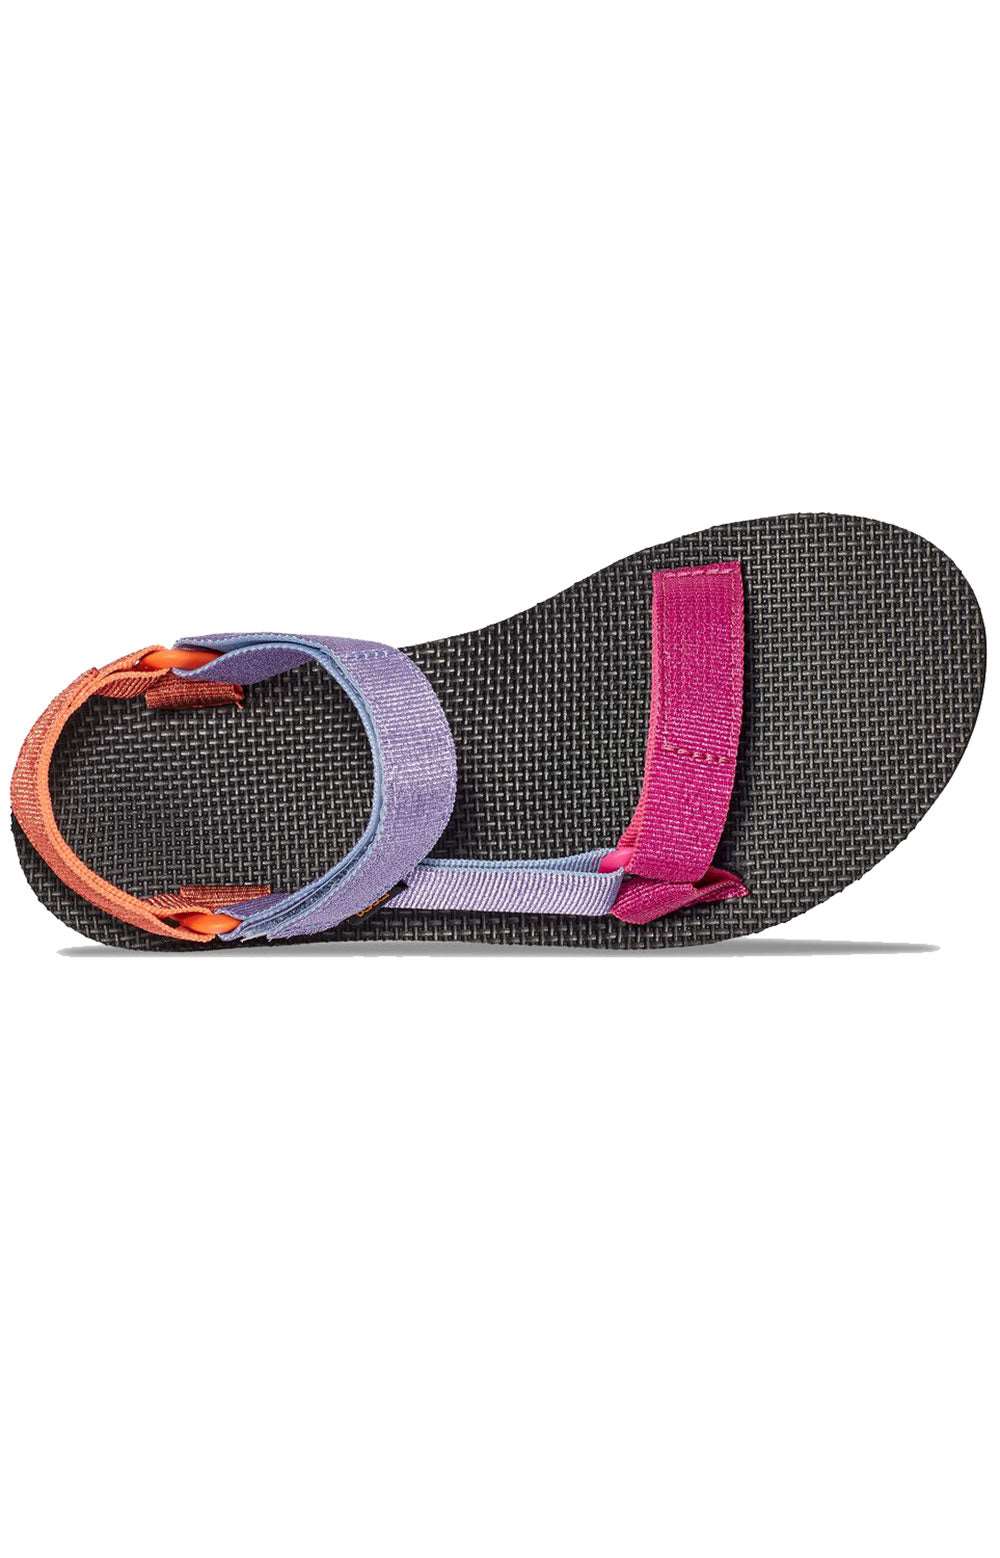 (1003987) Original Universal Sandals - Metallic Pink Multi